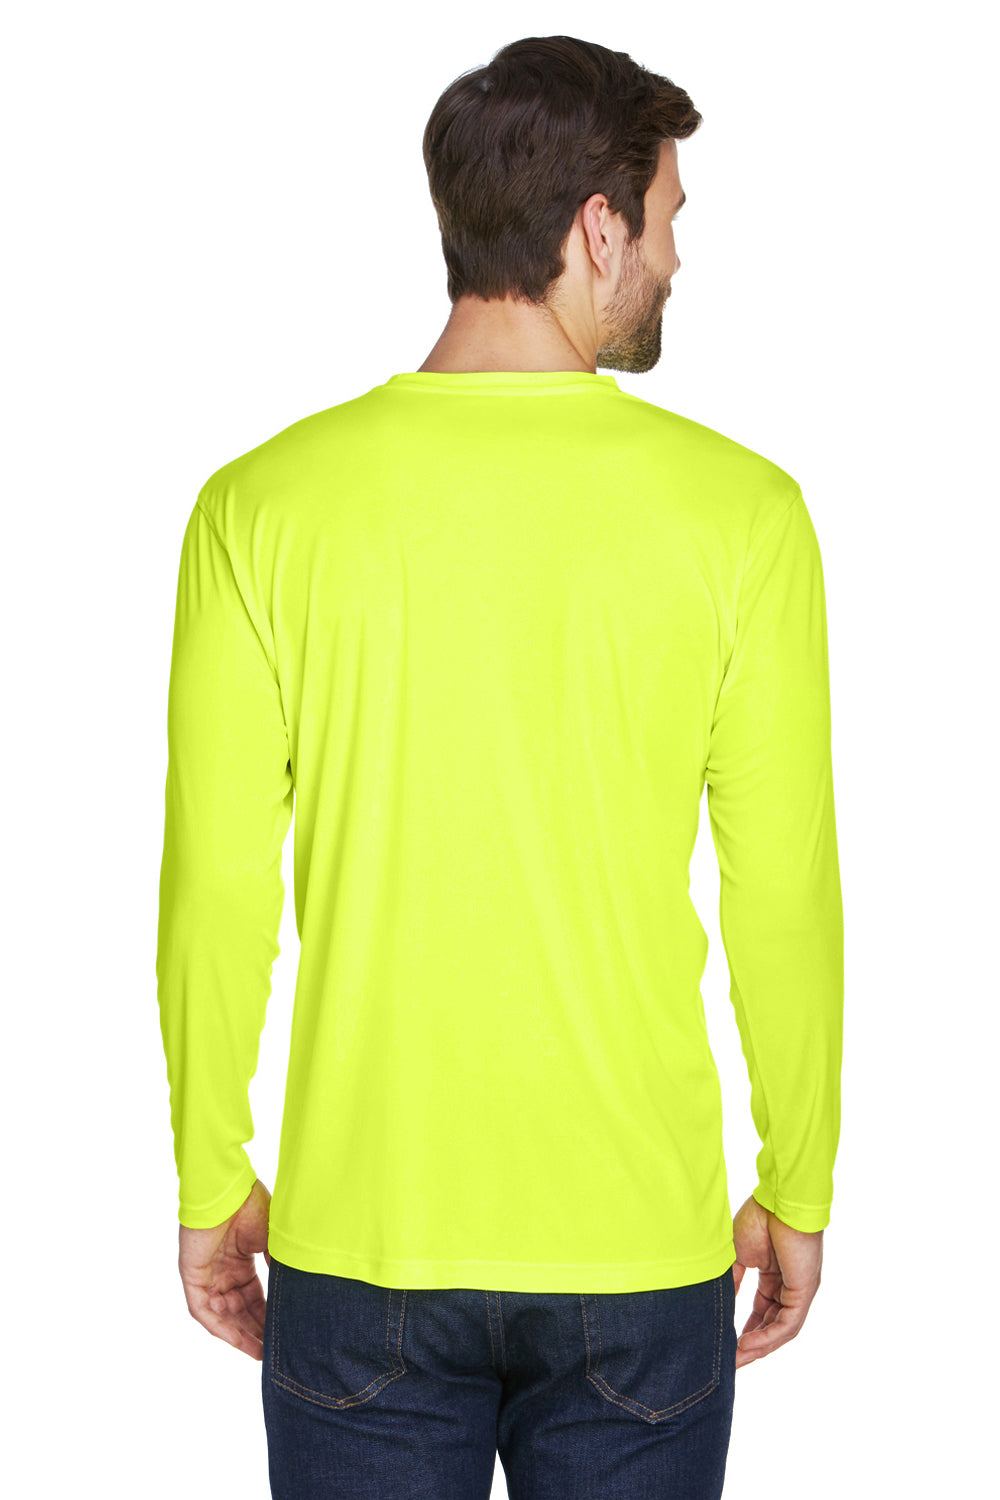 UltraClub 8422 Mens Cool & Dry Performance Moisture Wicking Long Sleeve Crewneck T-Shirt Bright Yellow Back